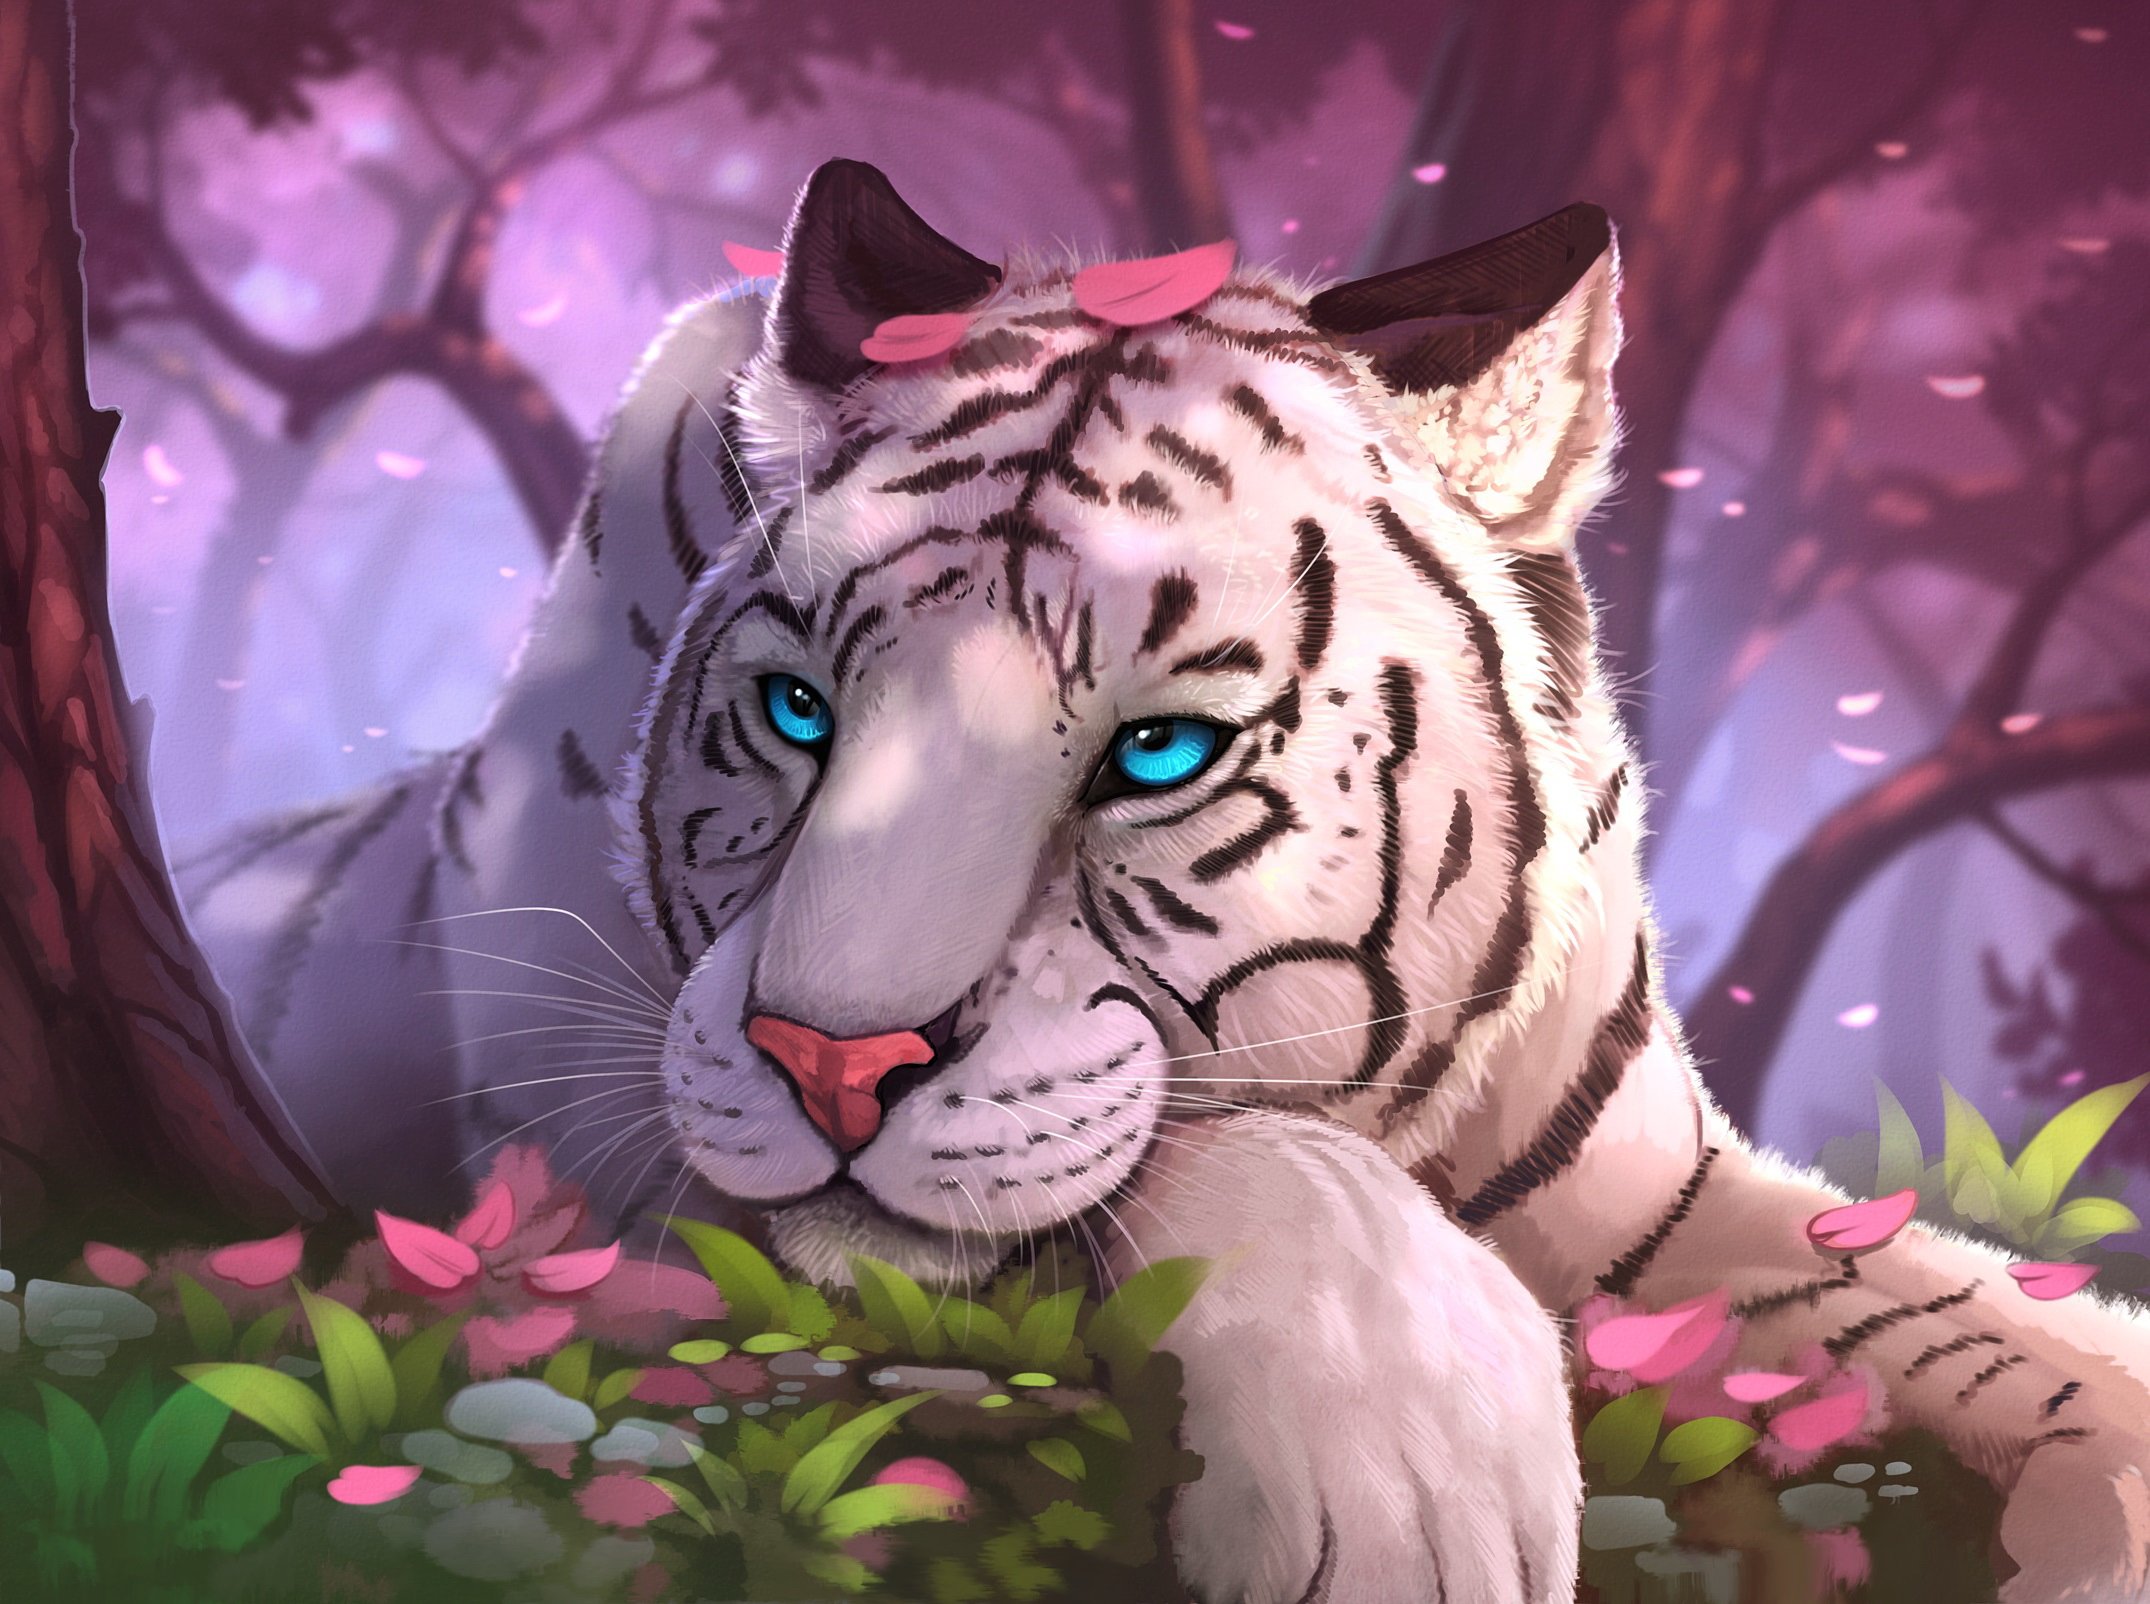 White Tiger Fantasy Art, HD Artist, 4k Wallpaper, Image